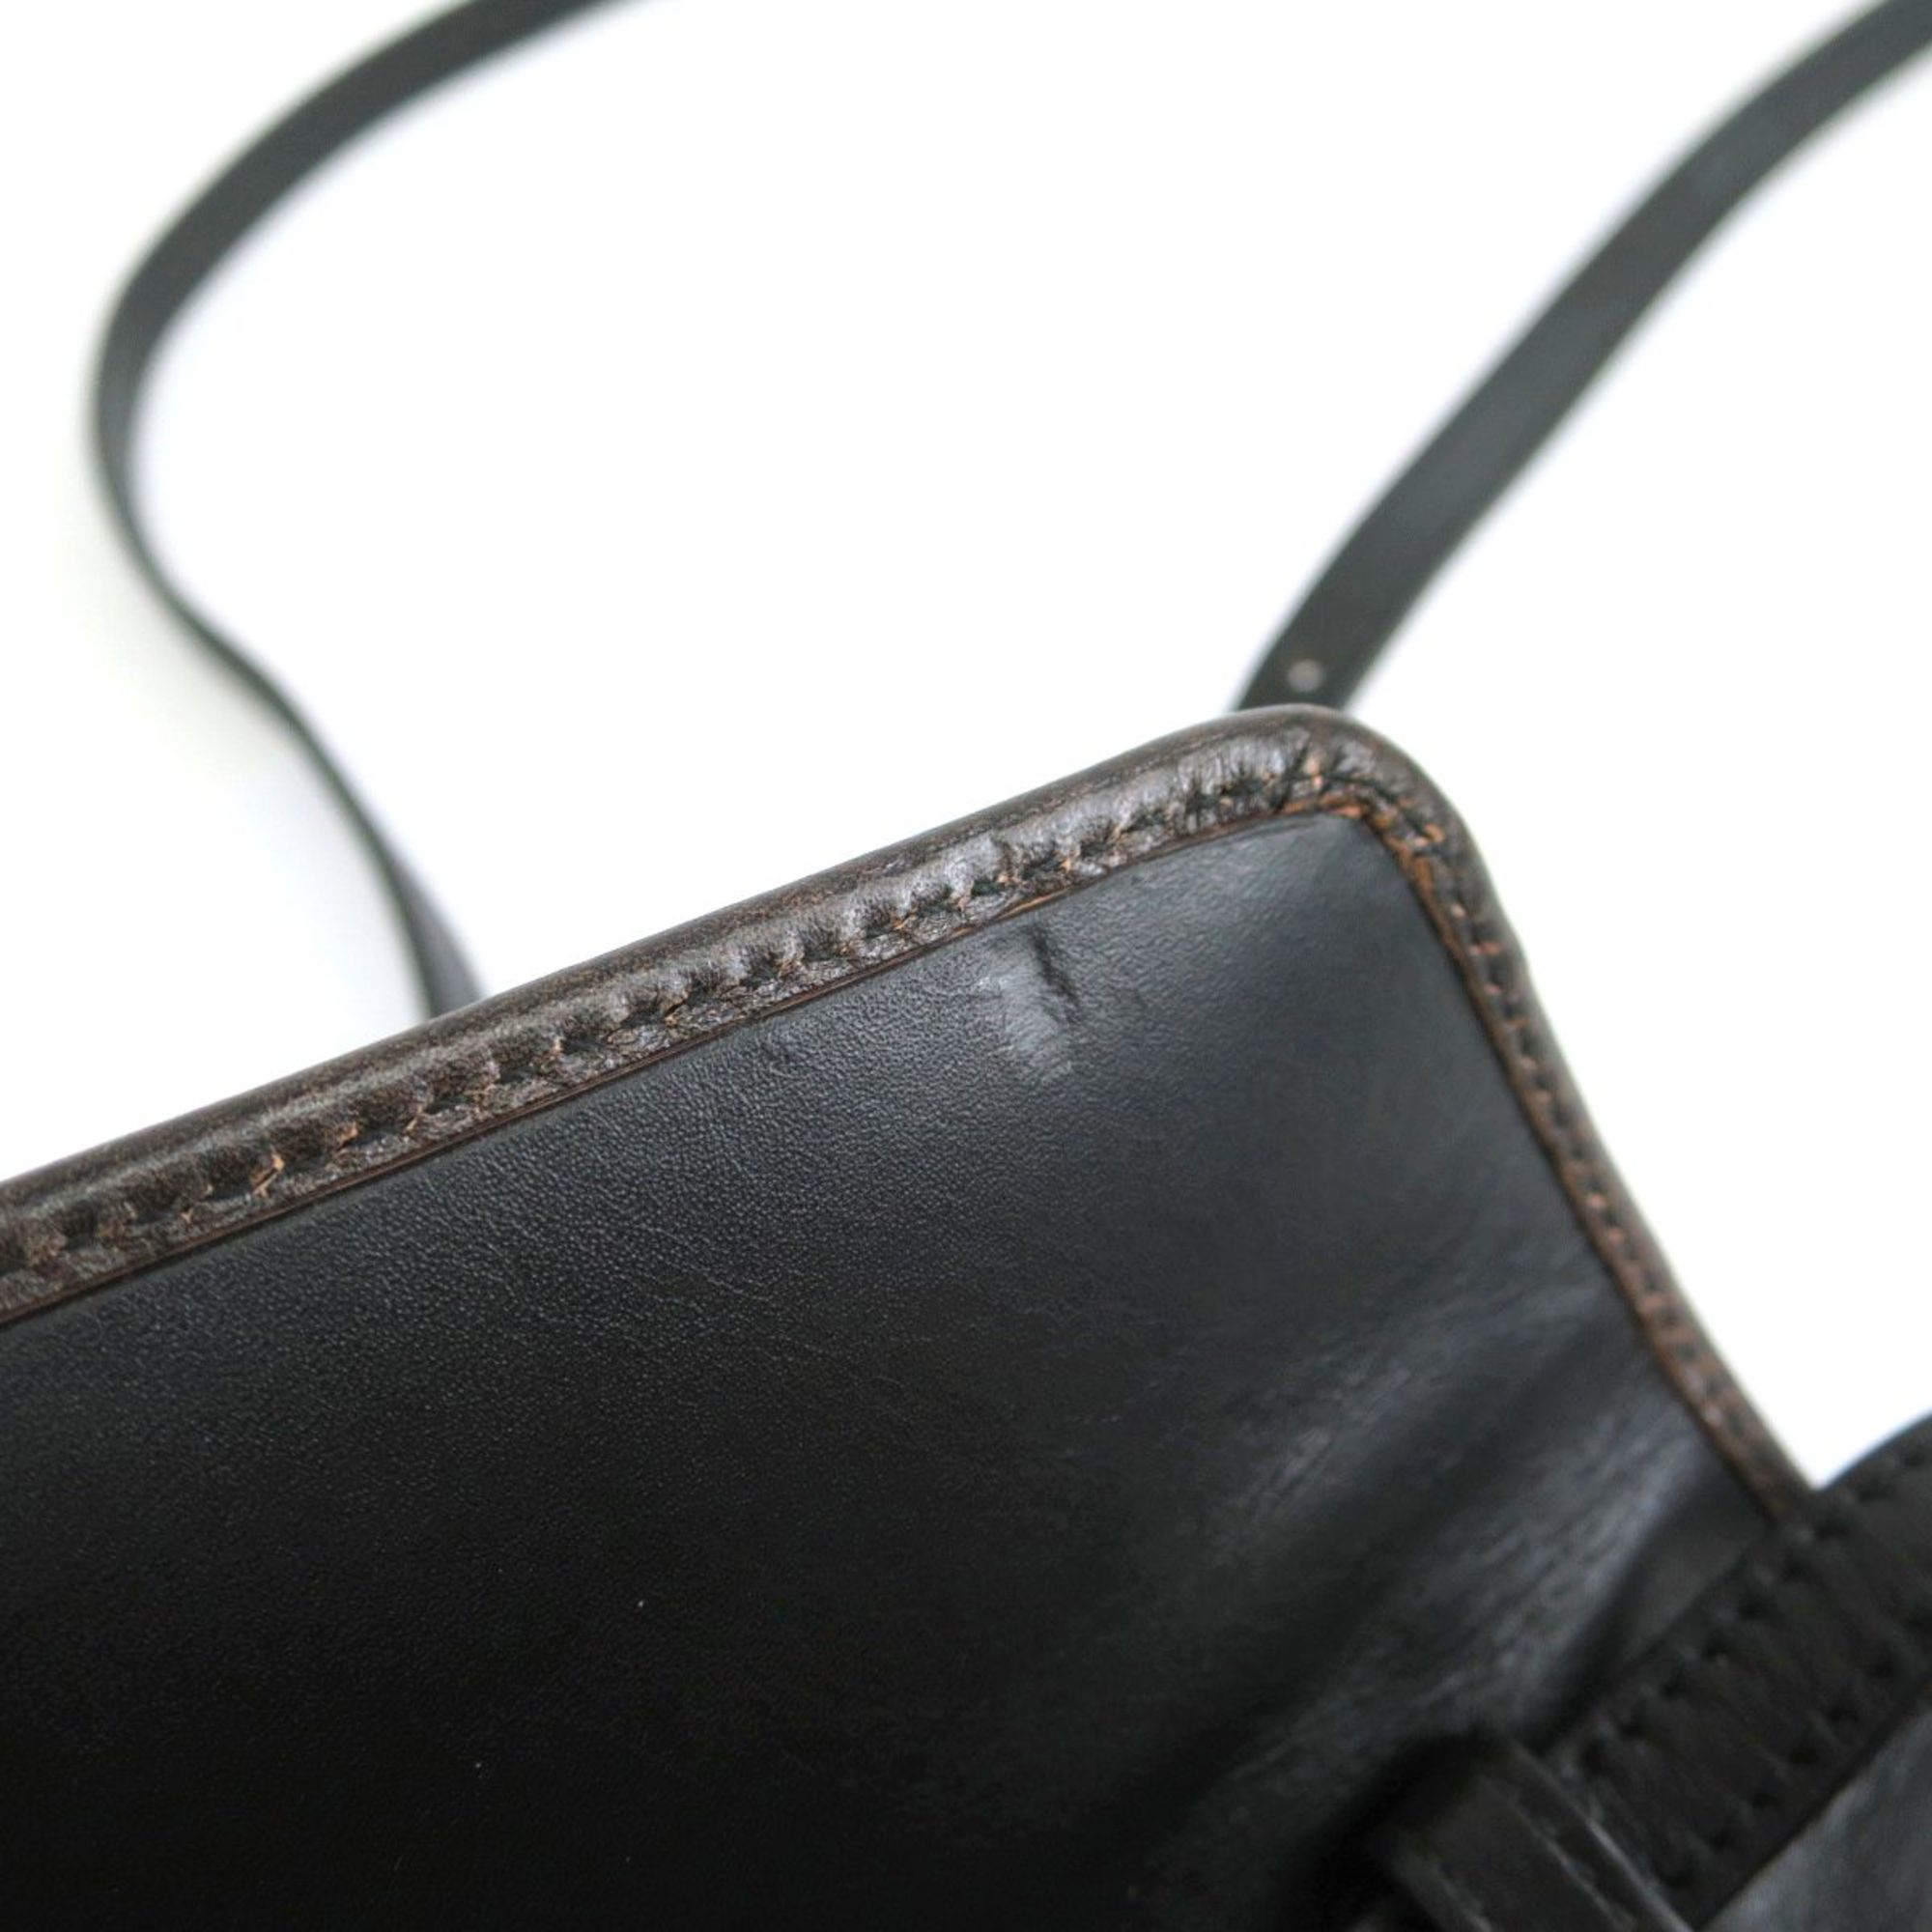 PRADA Long Wallet with Chain VITELLO VINTAGE EBANO 1M1290